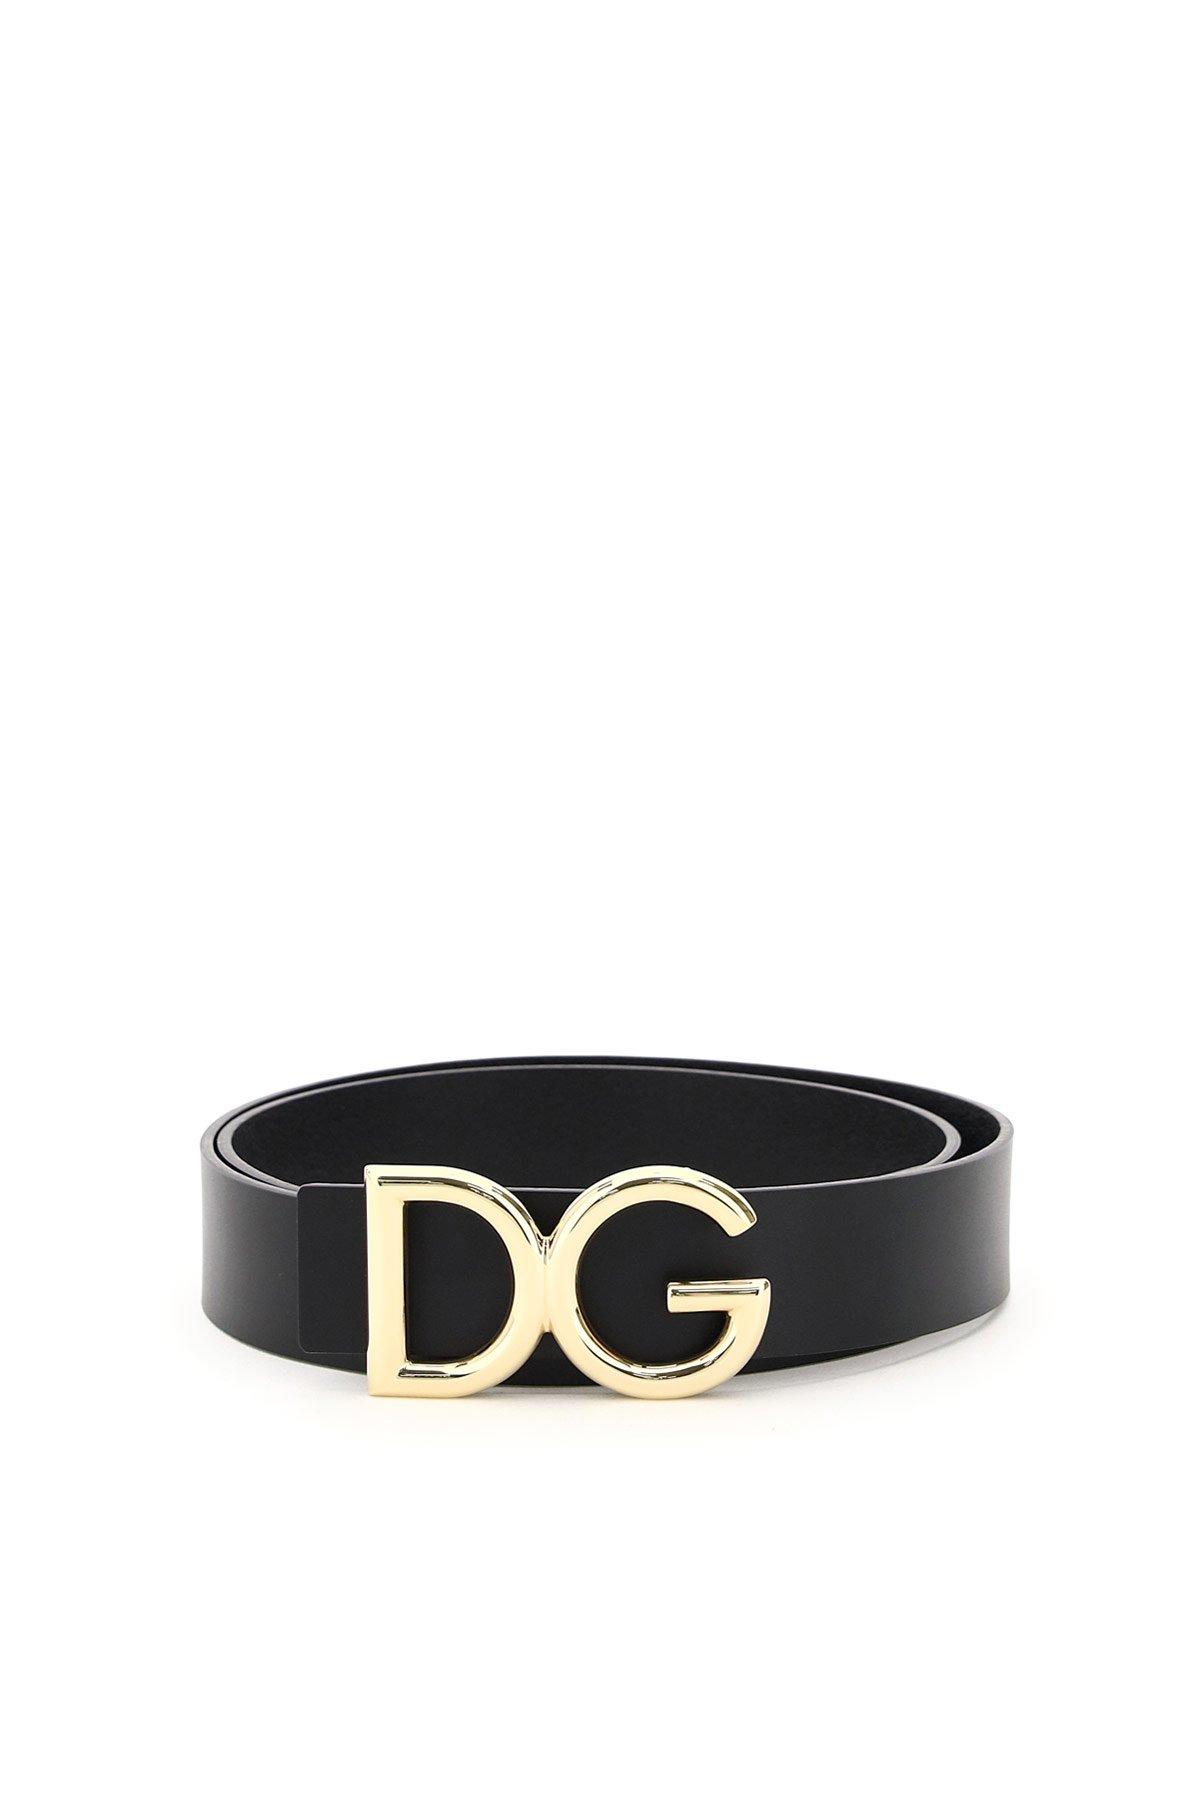 Dolce & Gabbana Leather Belt With Dg Logo in Black for Men - Save 